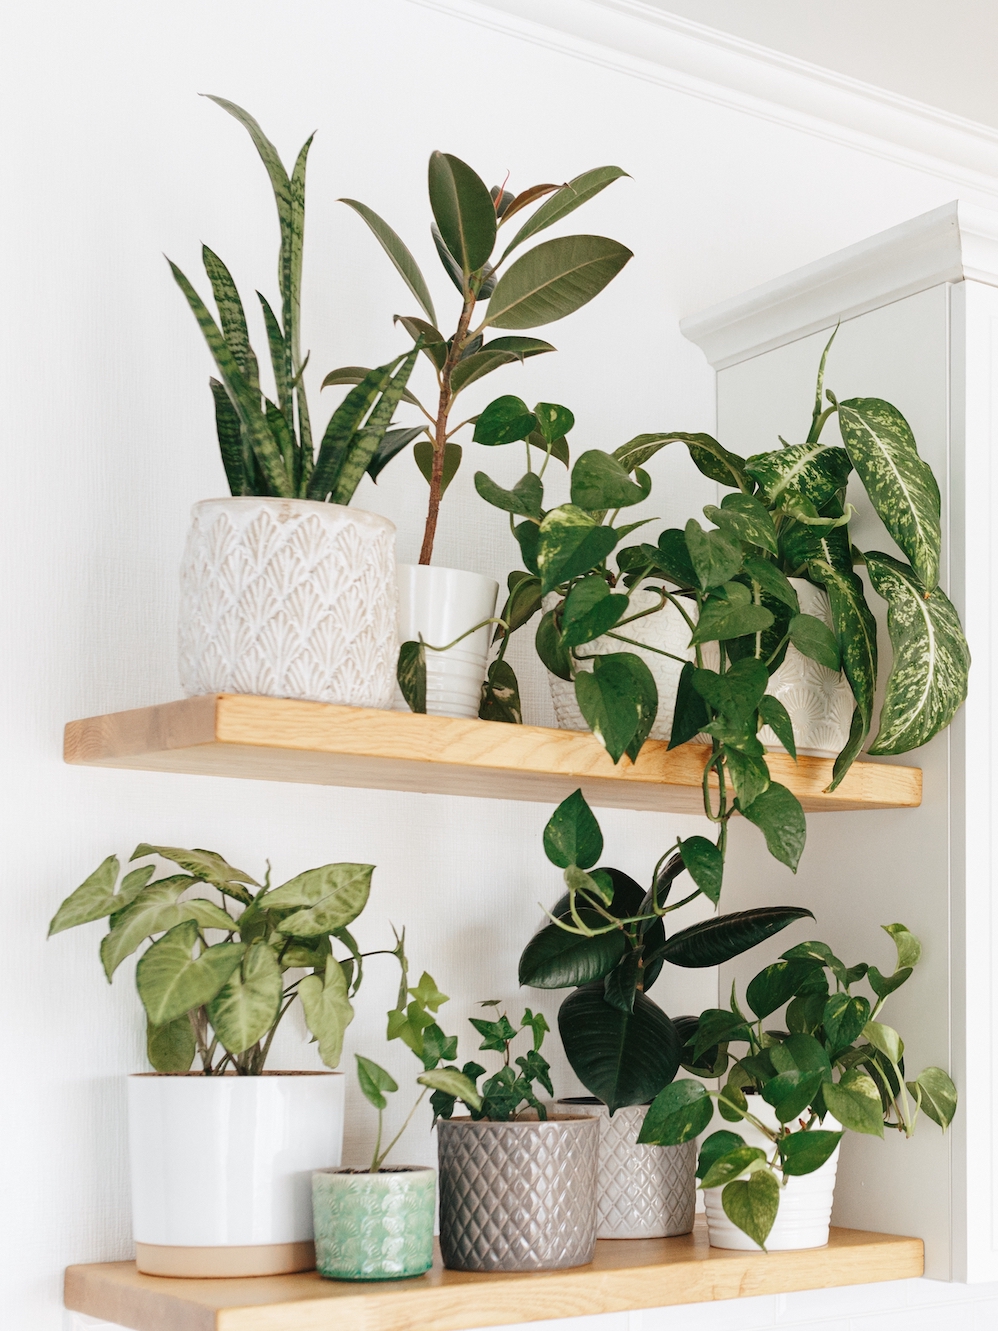 Stylish green houseplants on wooden shelves. Modern room decor urban jungle. Dieffenbachia, epipremnum, ficus, ivy, sansevieria in pots on shelf